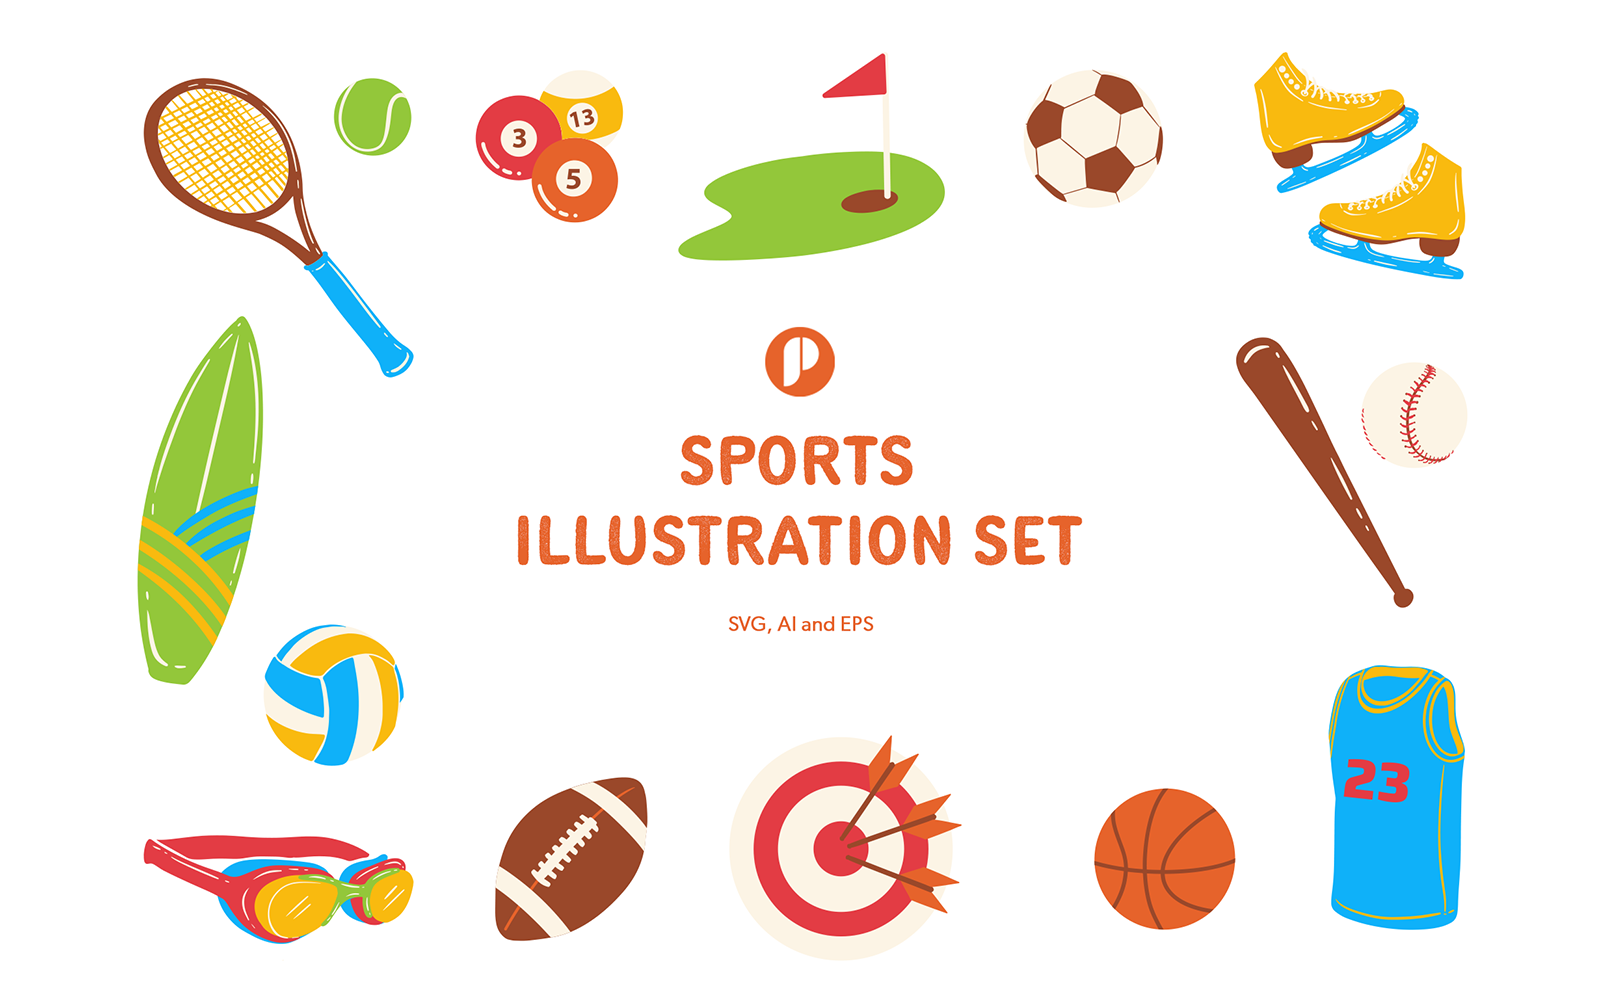 Sports illustration hand drawn set